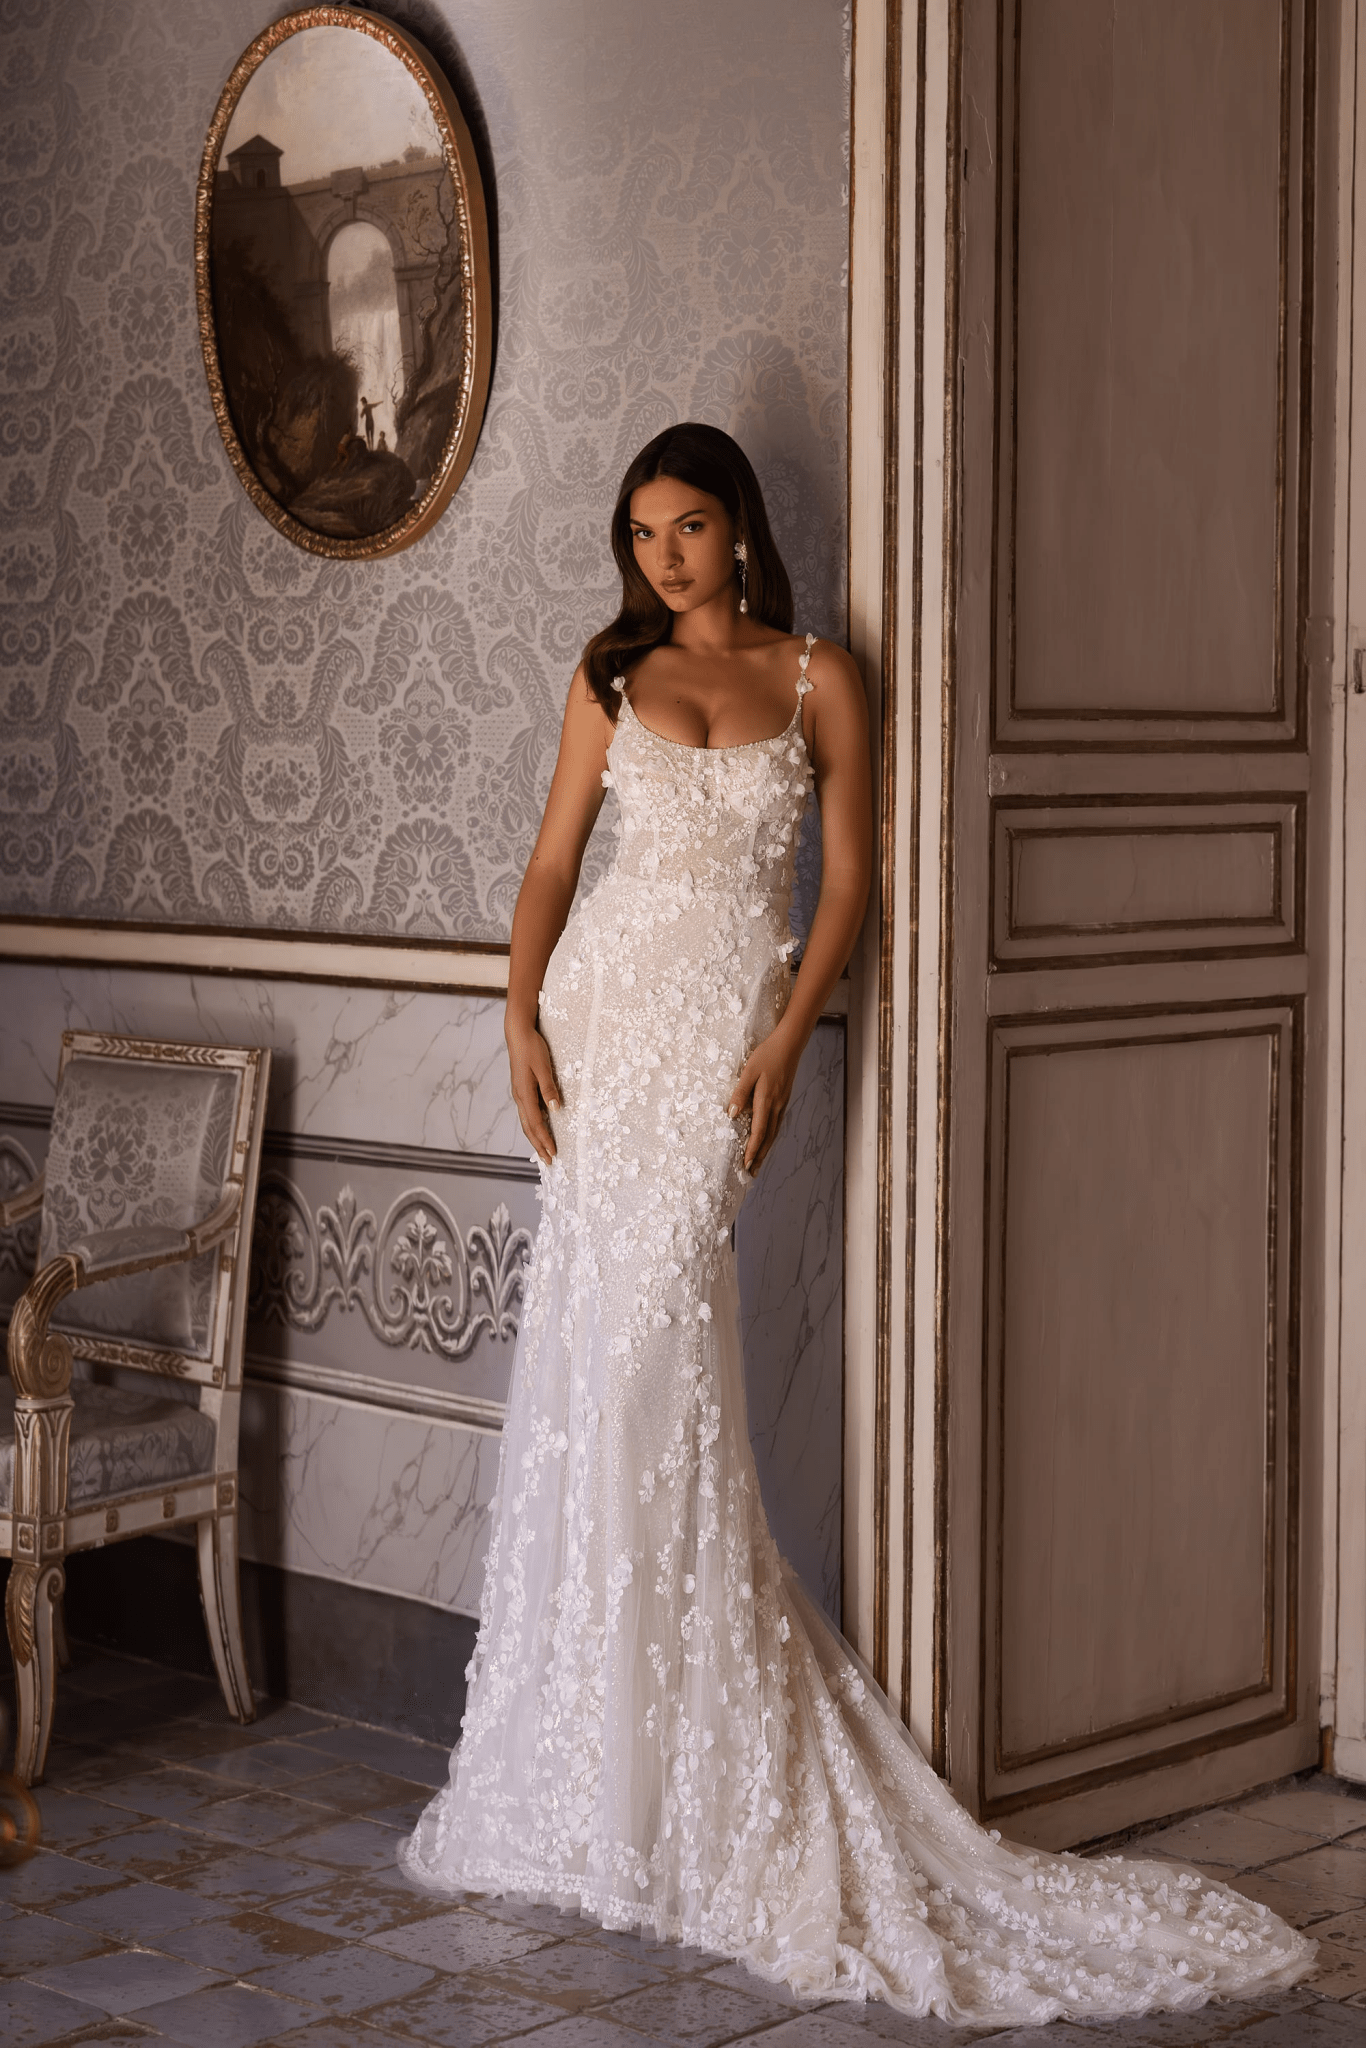 Elegance A-Line Wedding Dress - Detachable Wedding Dress With Lace Detail - Convertible Wedding Dress Plus Size - WonderlandByLilian